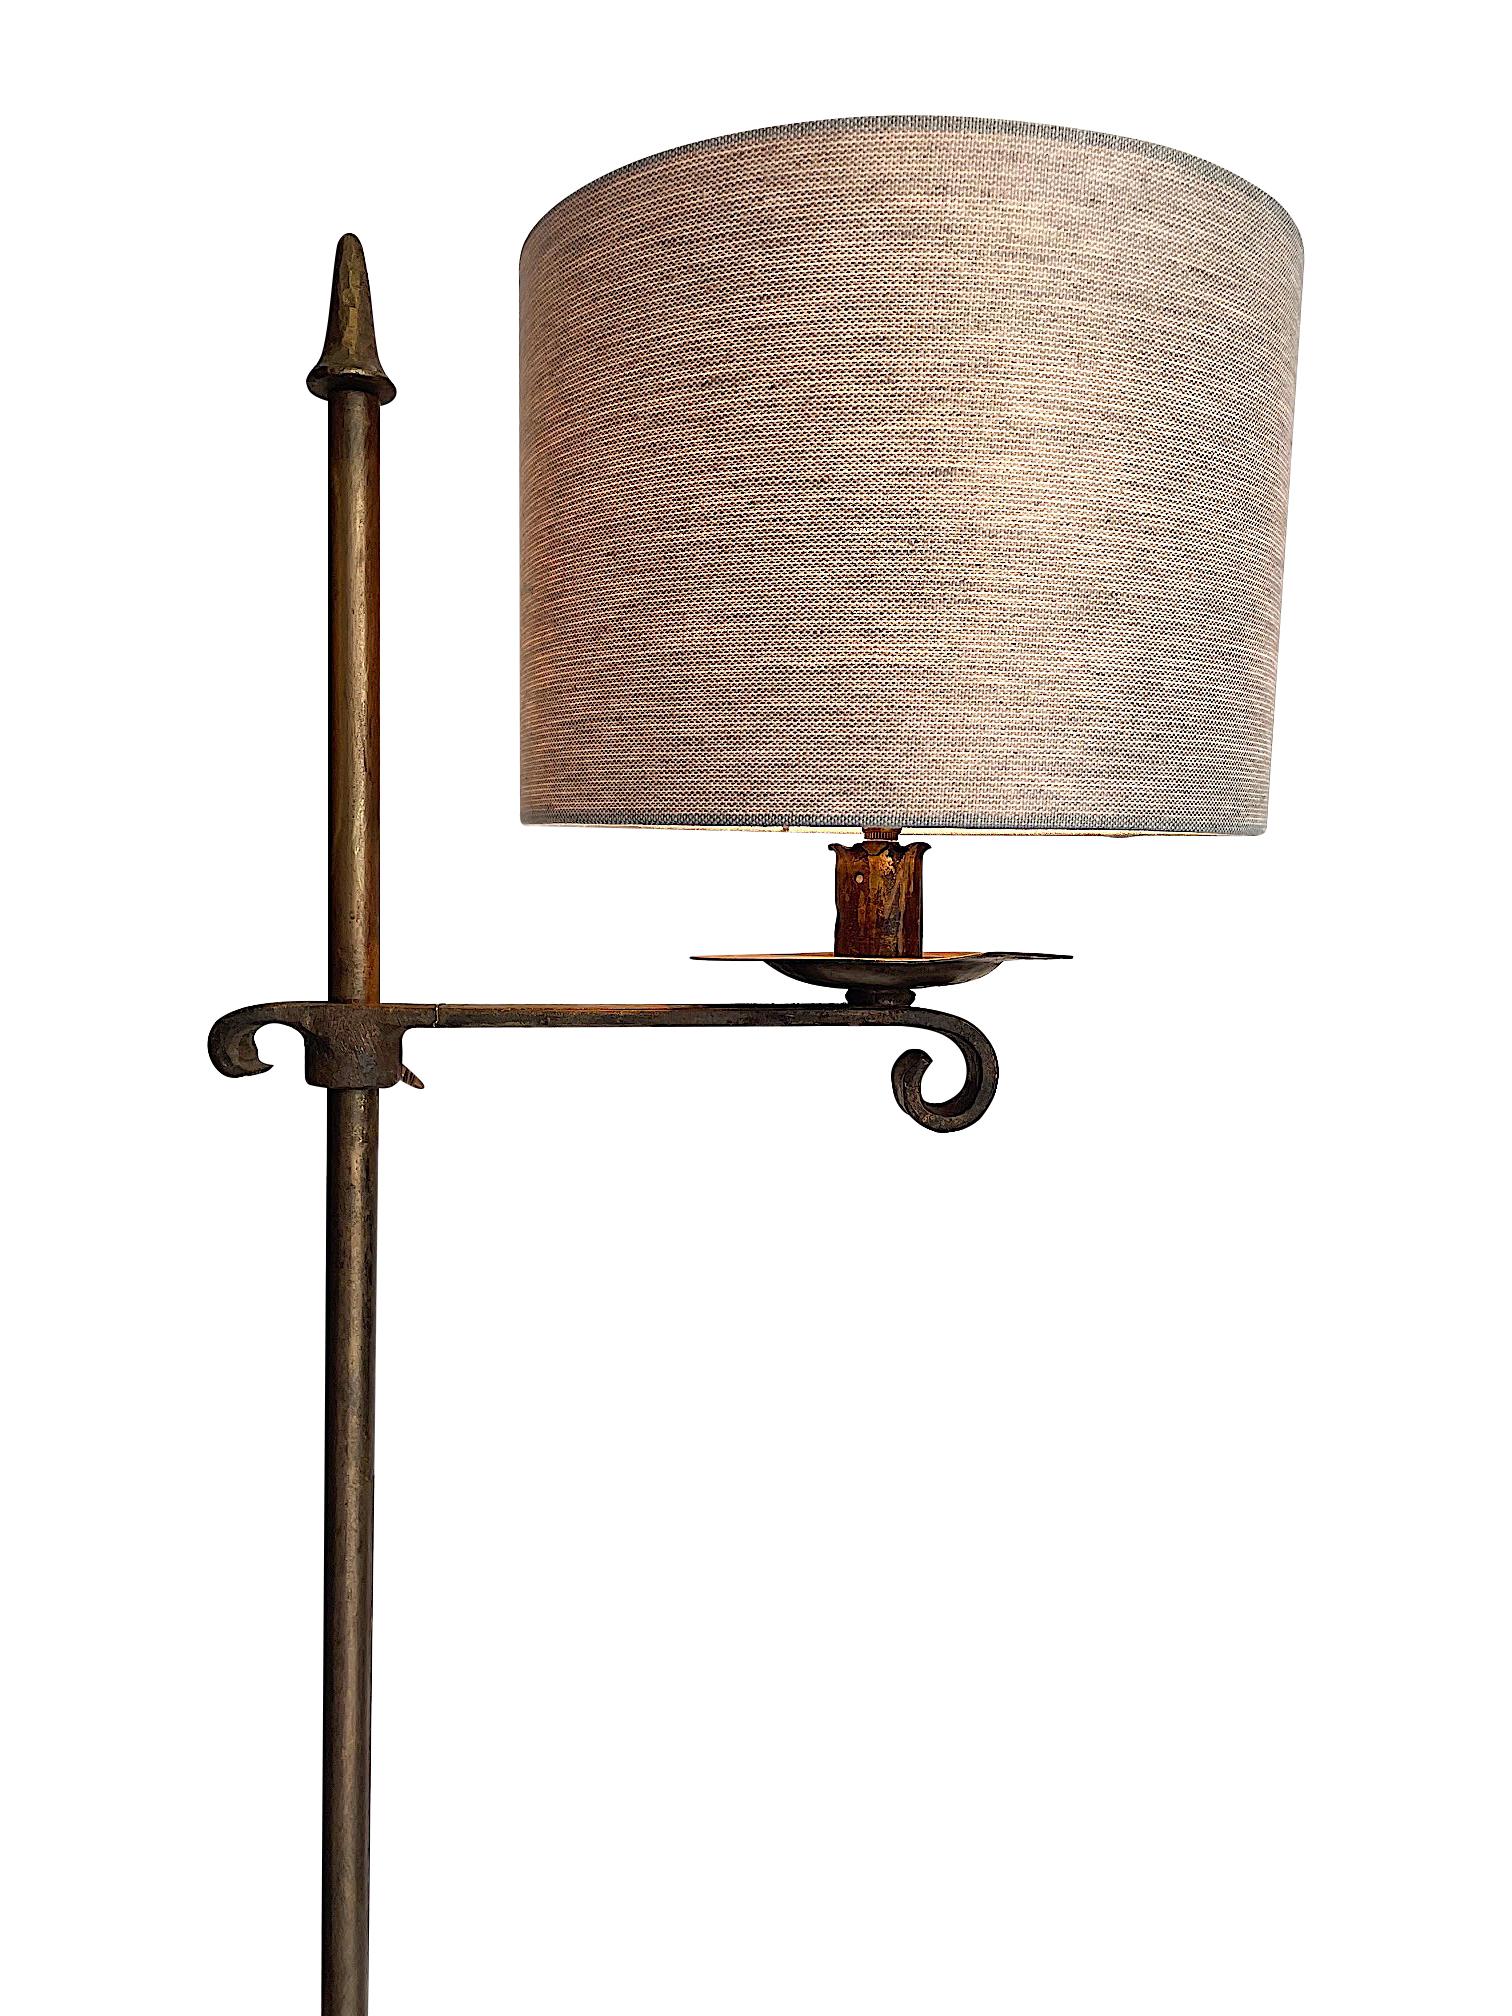 lamp shade in spanish